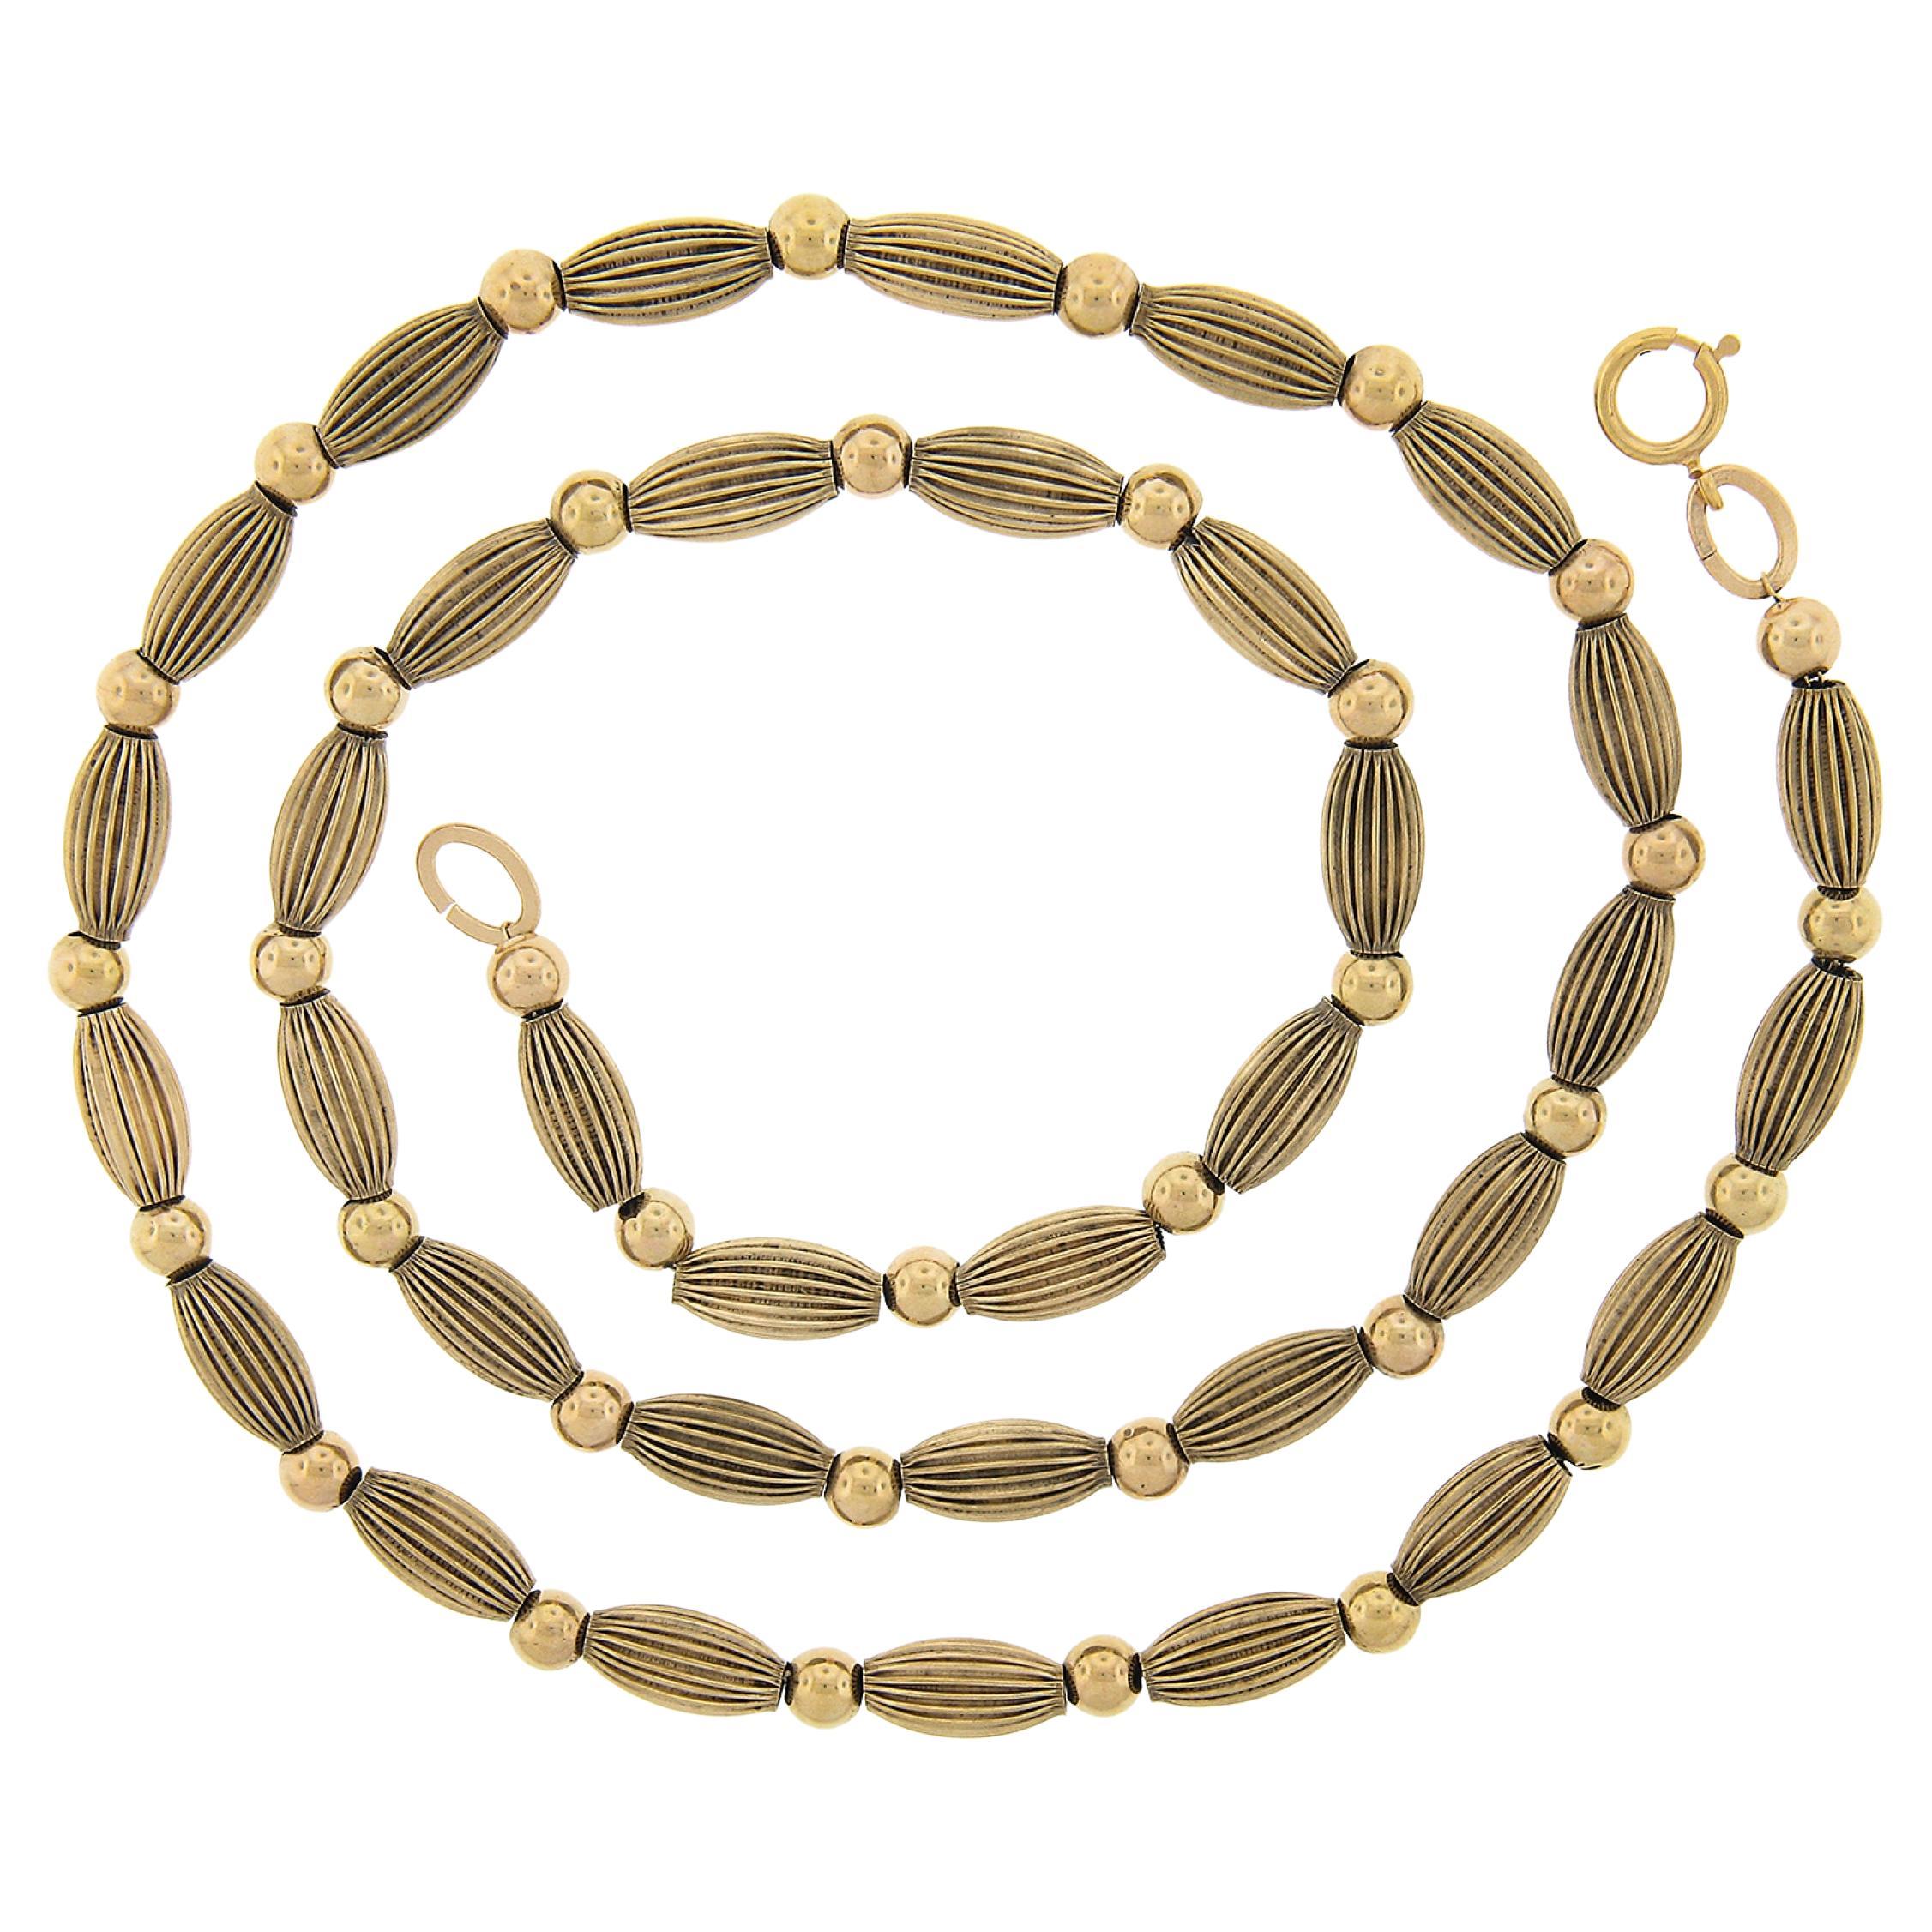 Vintage 14k Gold 18" Alternating Grooved & Polished Bead on Cable Link Necklace